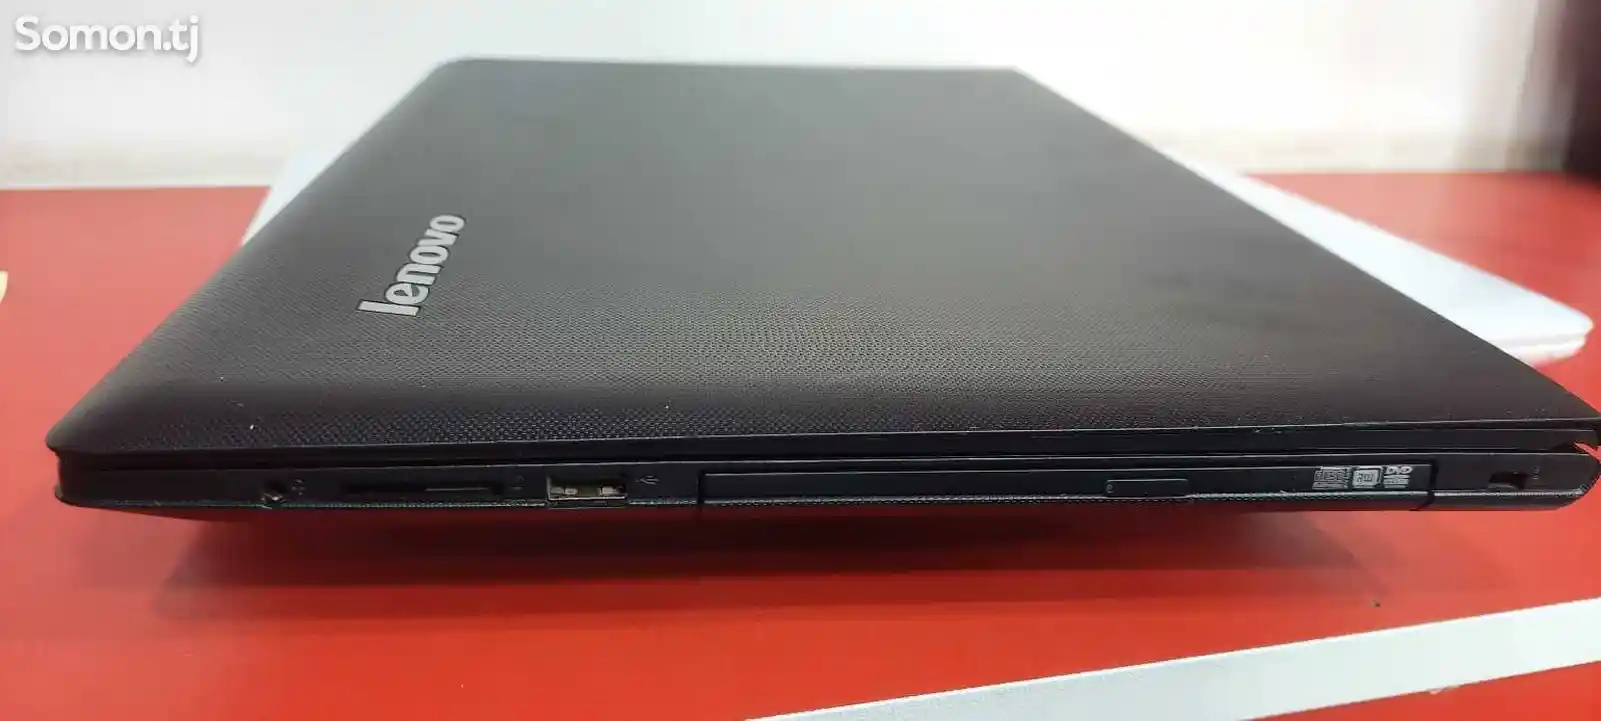 Ноутбук Lenovo AMD A10 8/256 Видекарта 2 Gb-4